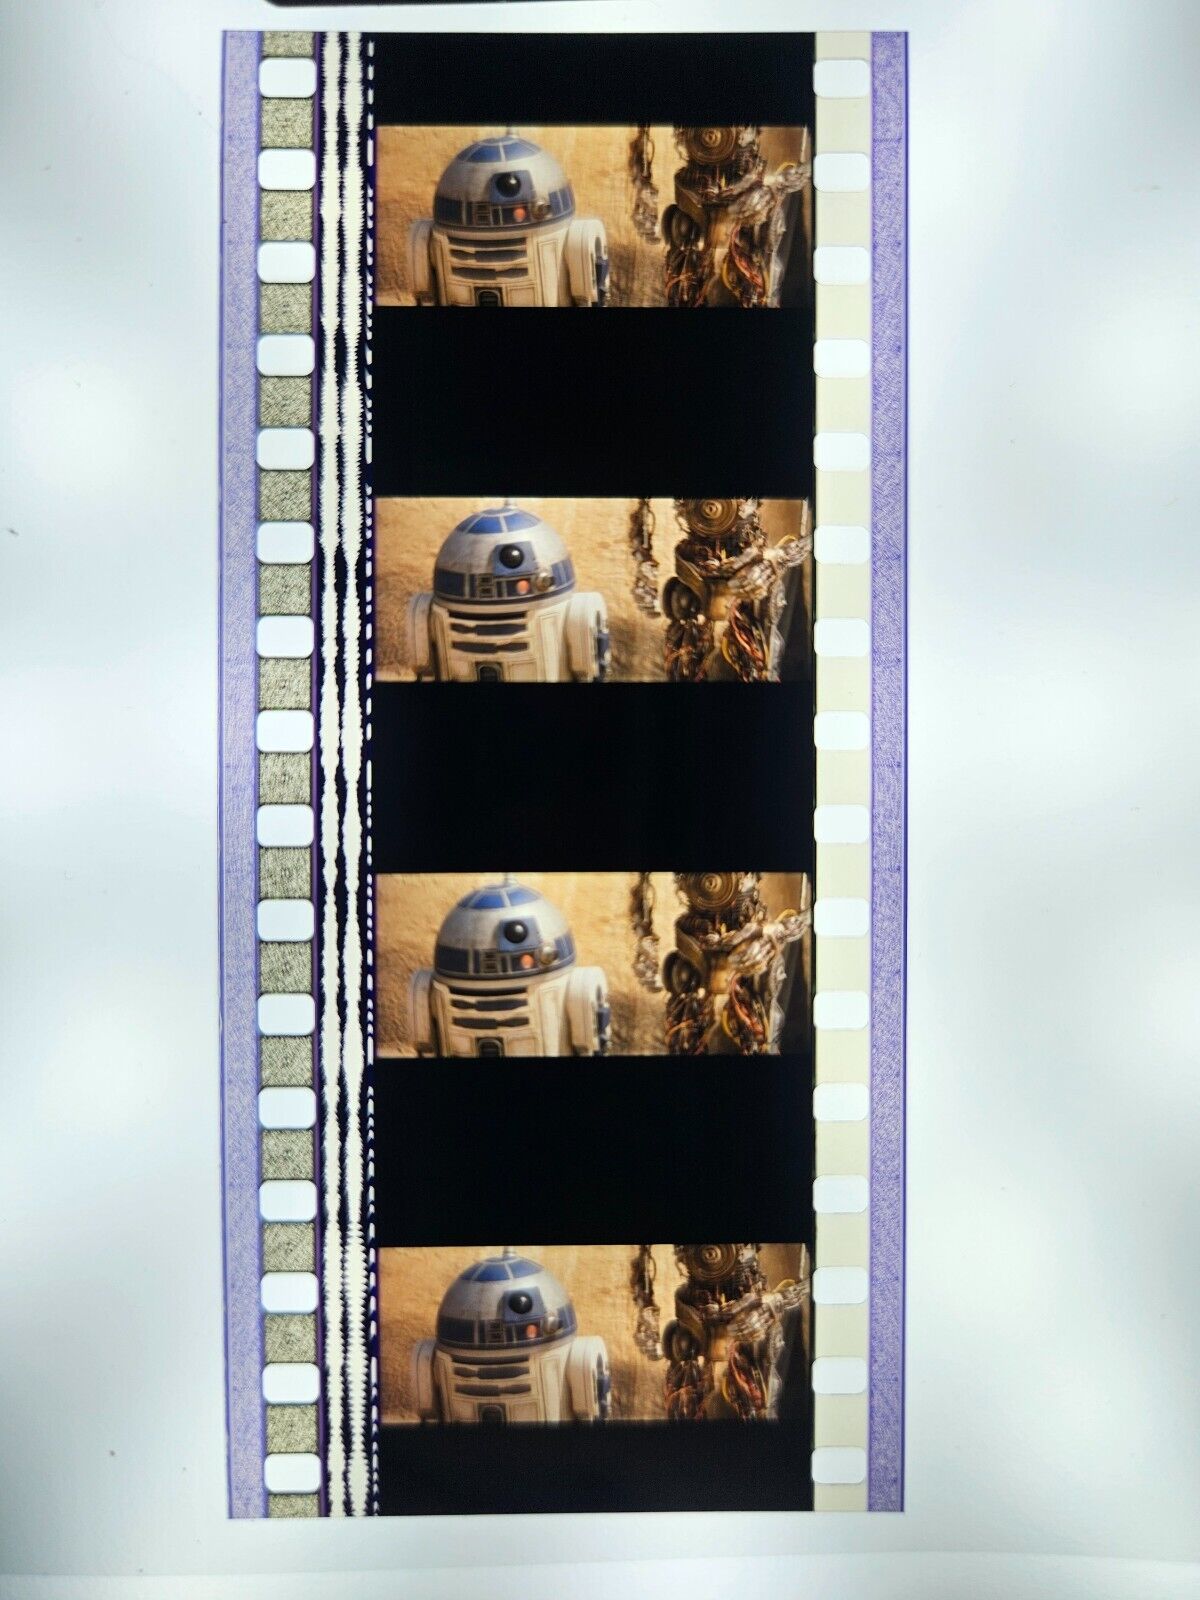 R2-D2 C-3PO Star Wars Episode 1 Phantom Menace 35mm Original Film Cells SW2091 Star Wars 35mm Film Cell - Hobby Gems